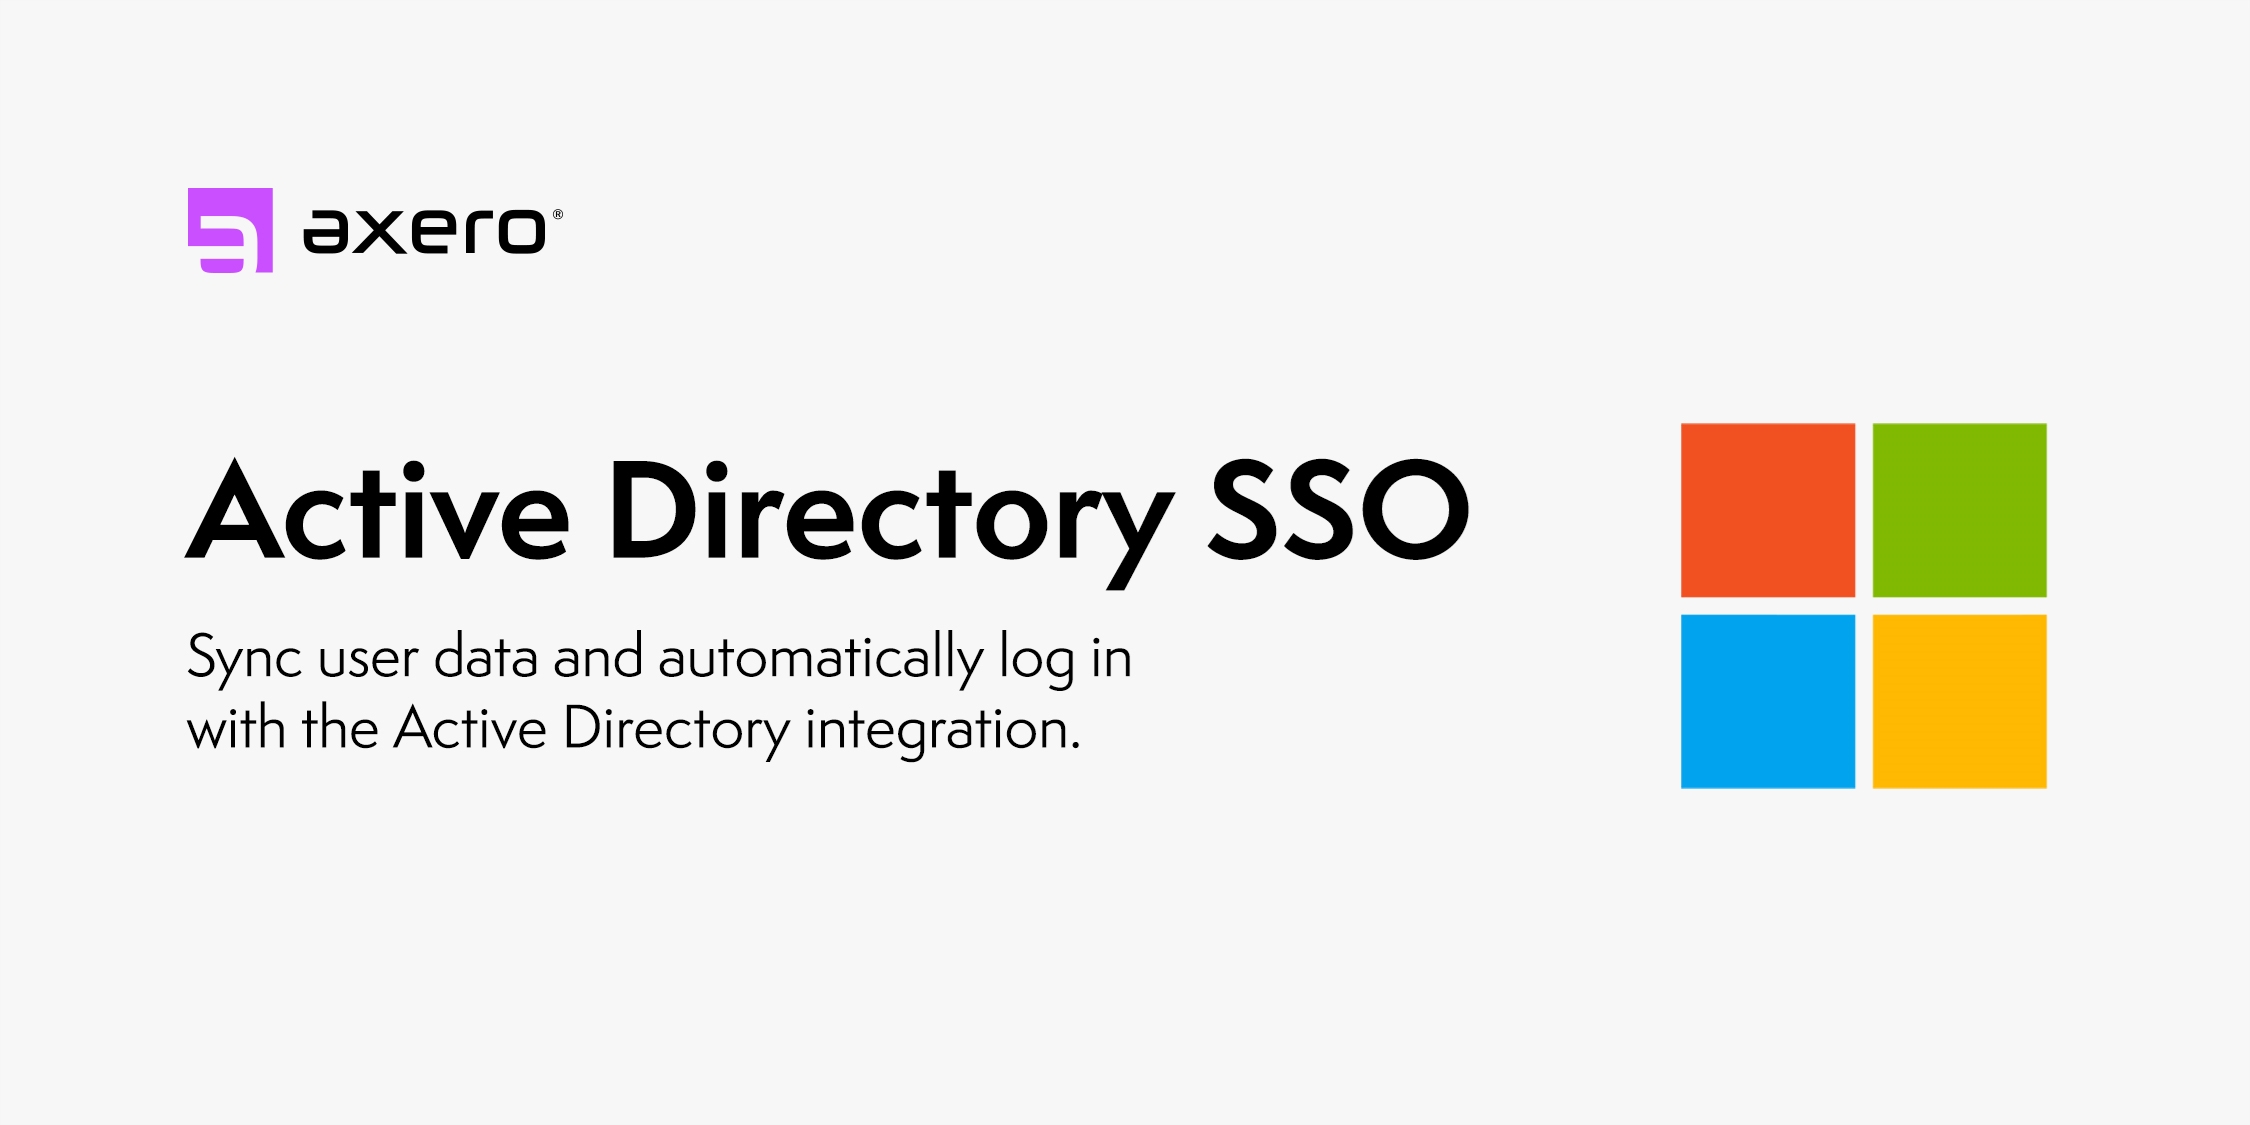 axero active directory single sign on sso